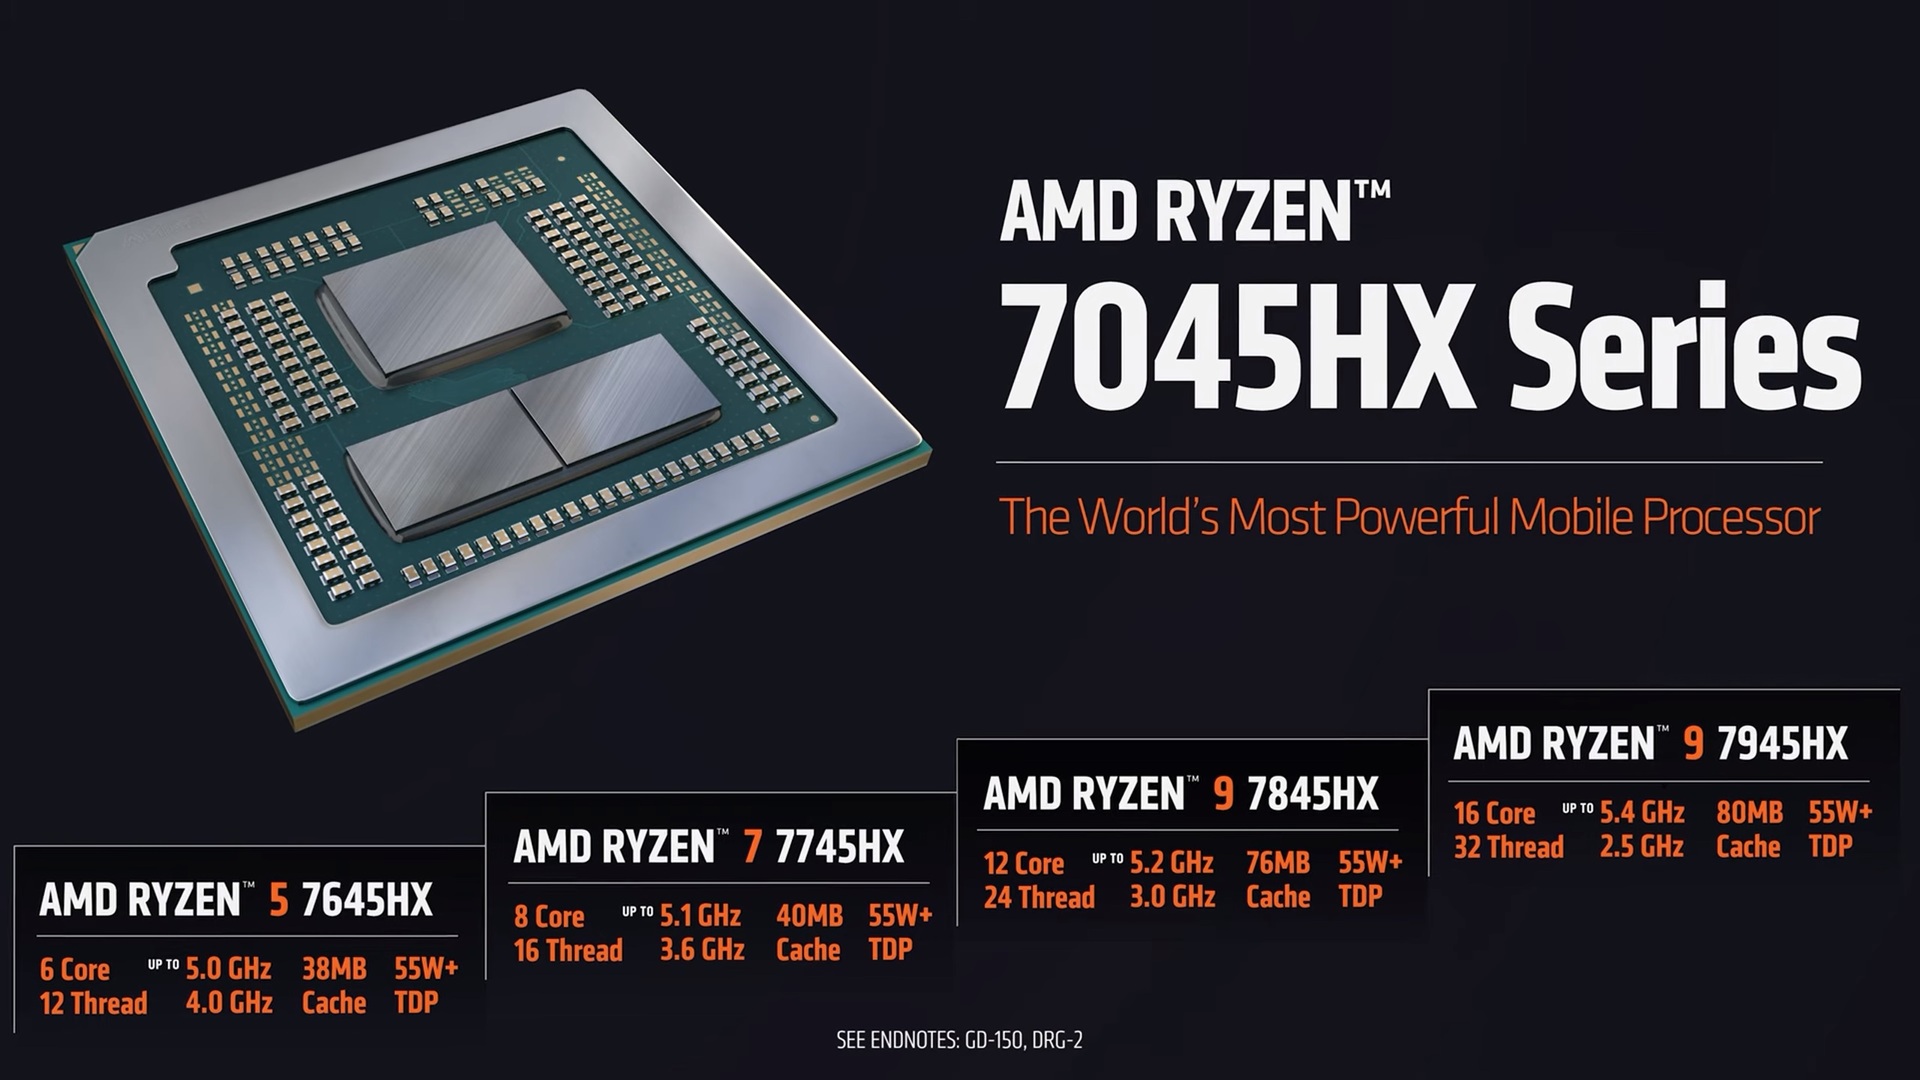 AMD Ryzen 7045HX